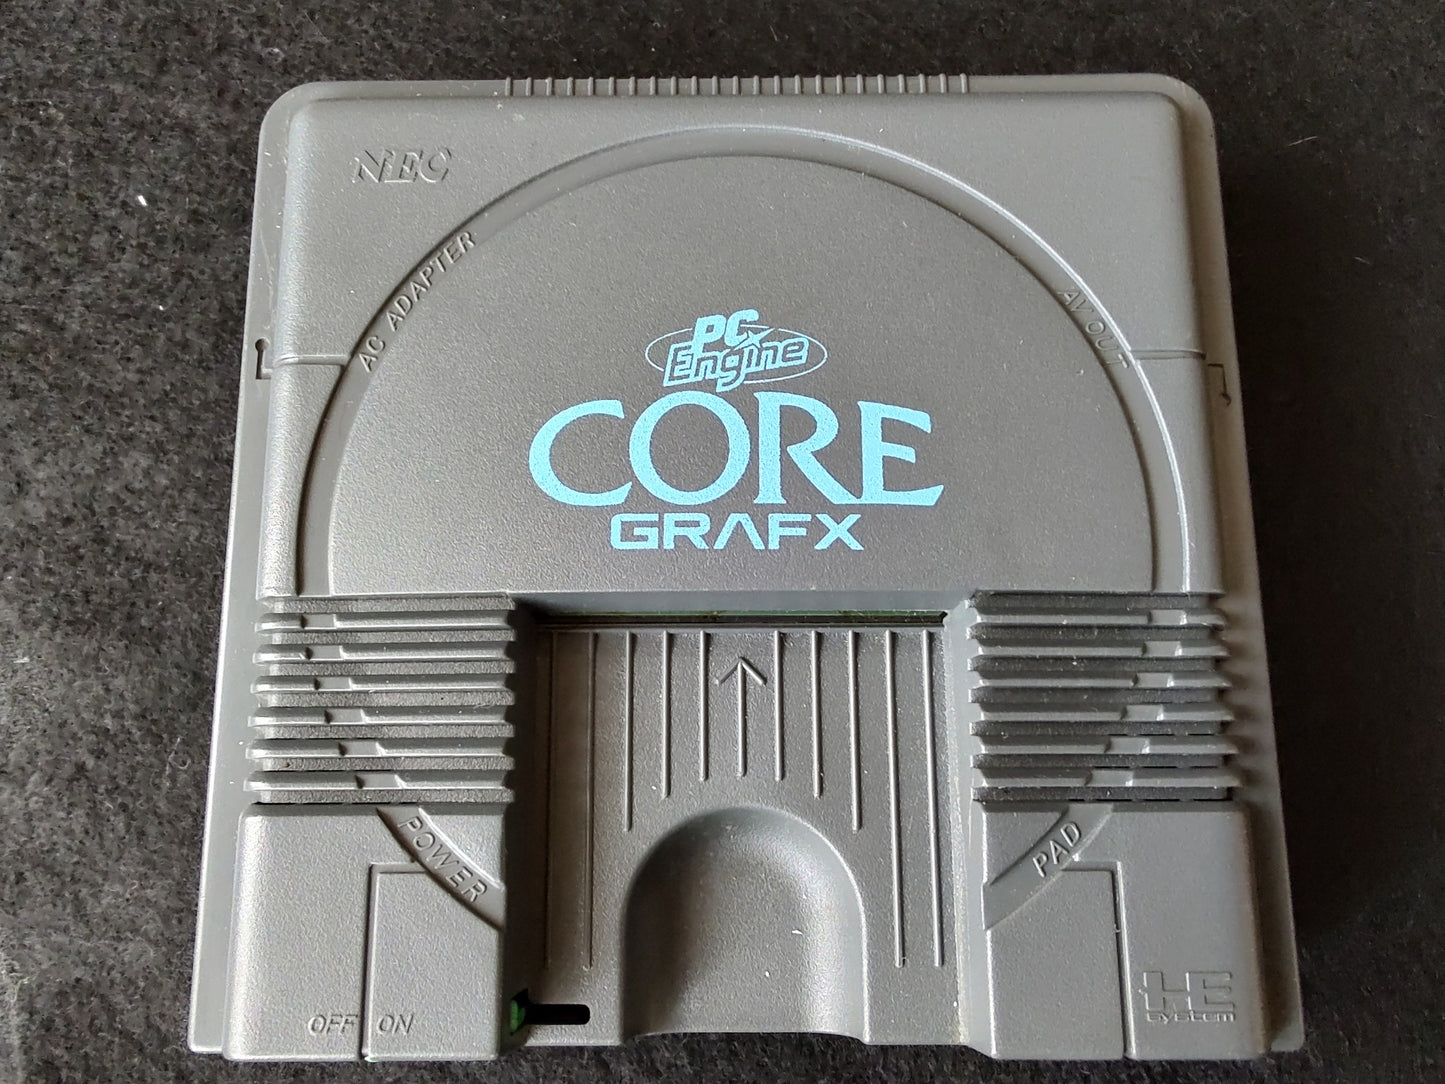 NEC PC Engine Coregrafx Console PI-TG3 TurboGrafx16, Pad, Gamel Boxed set-f0420-